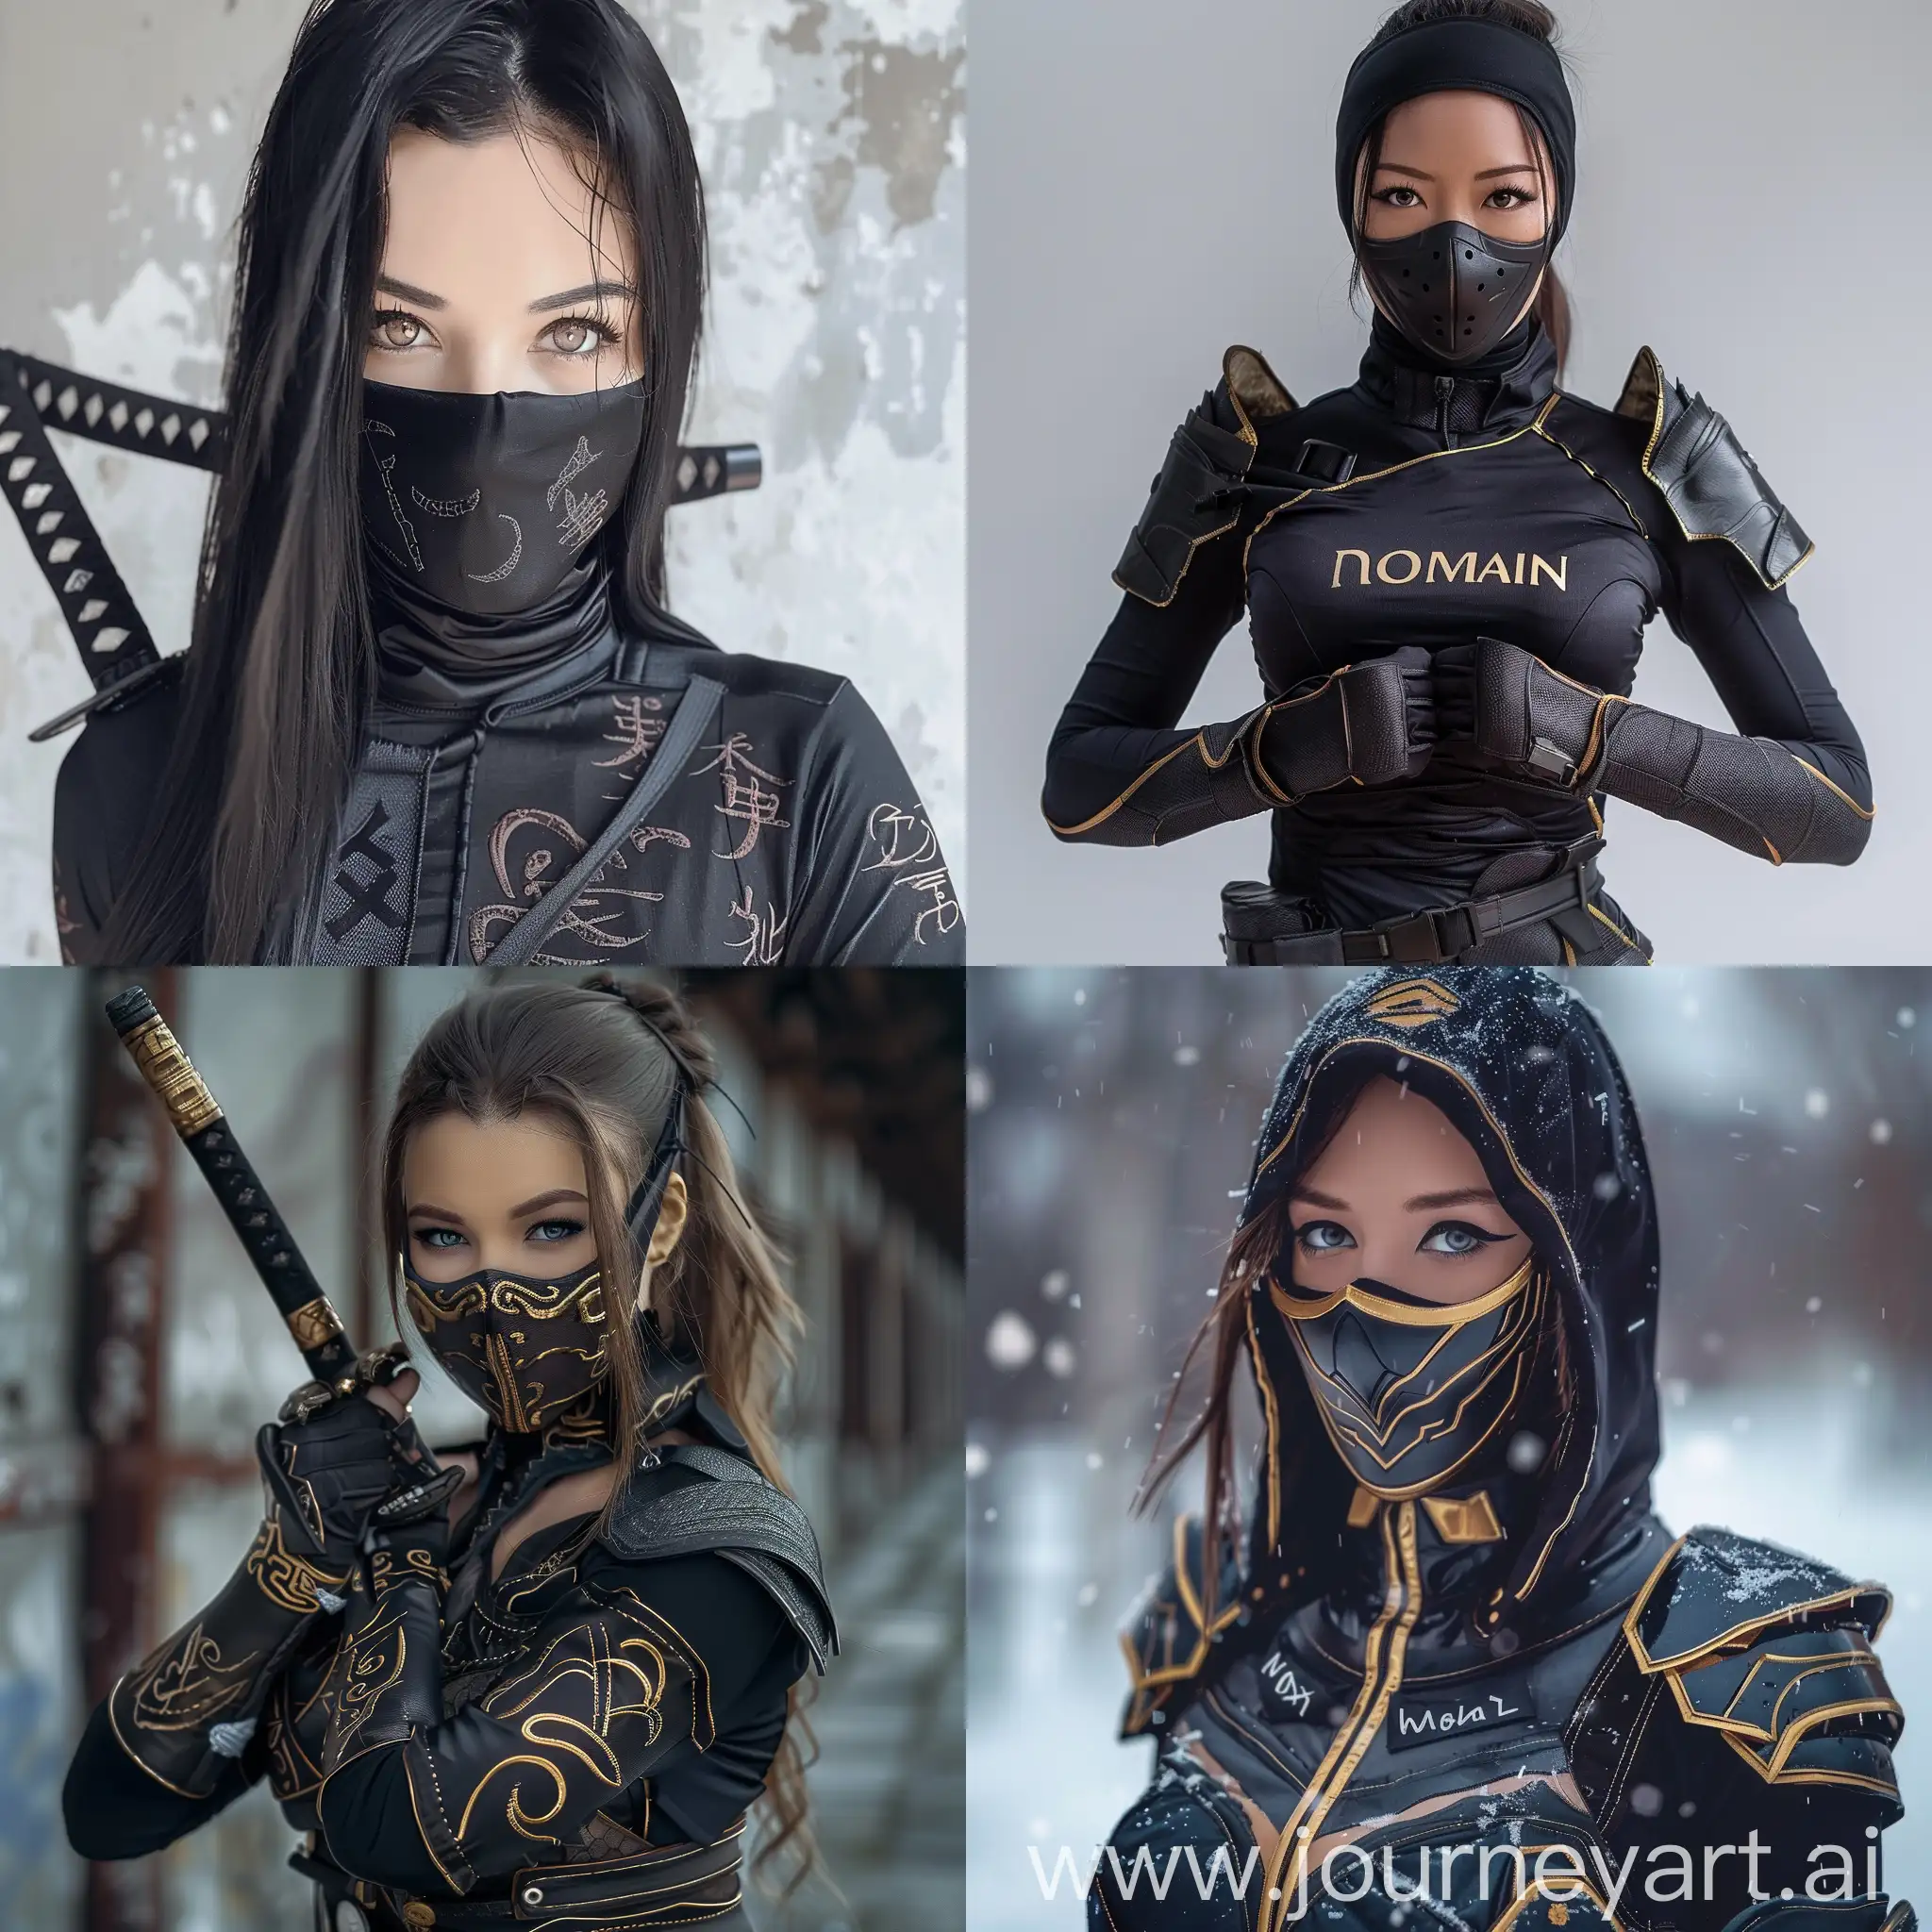 Realistic-Nova-Skilled-Ninja-Woman-in-Action